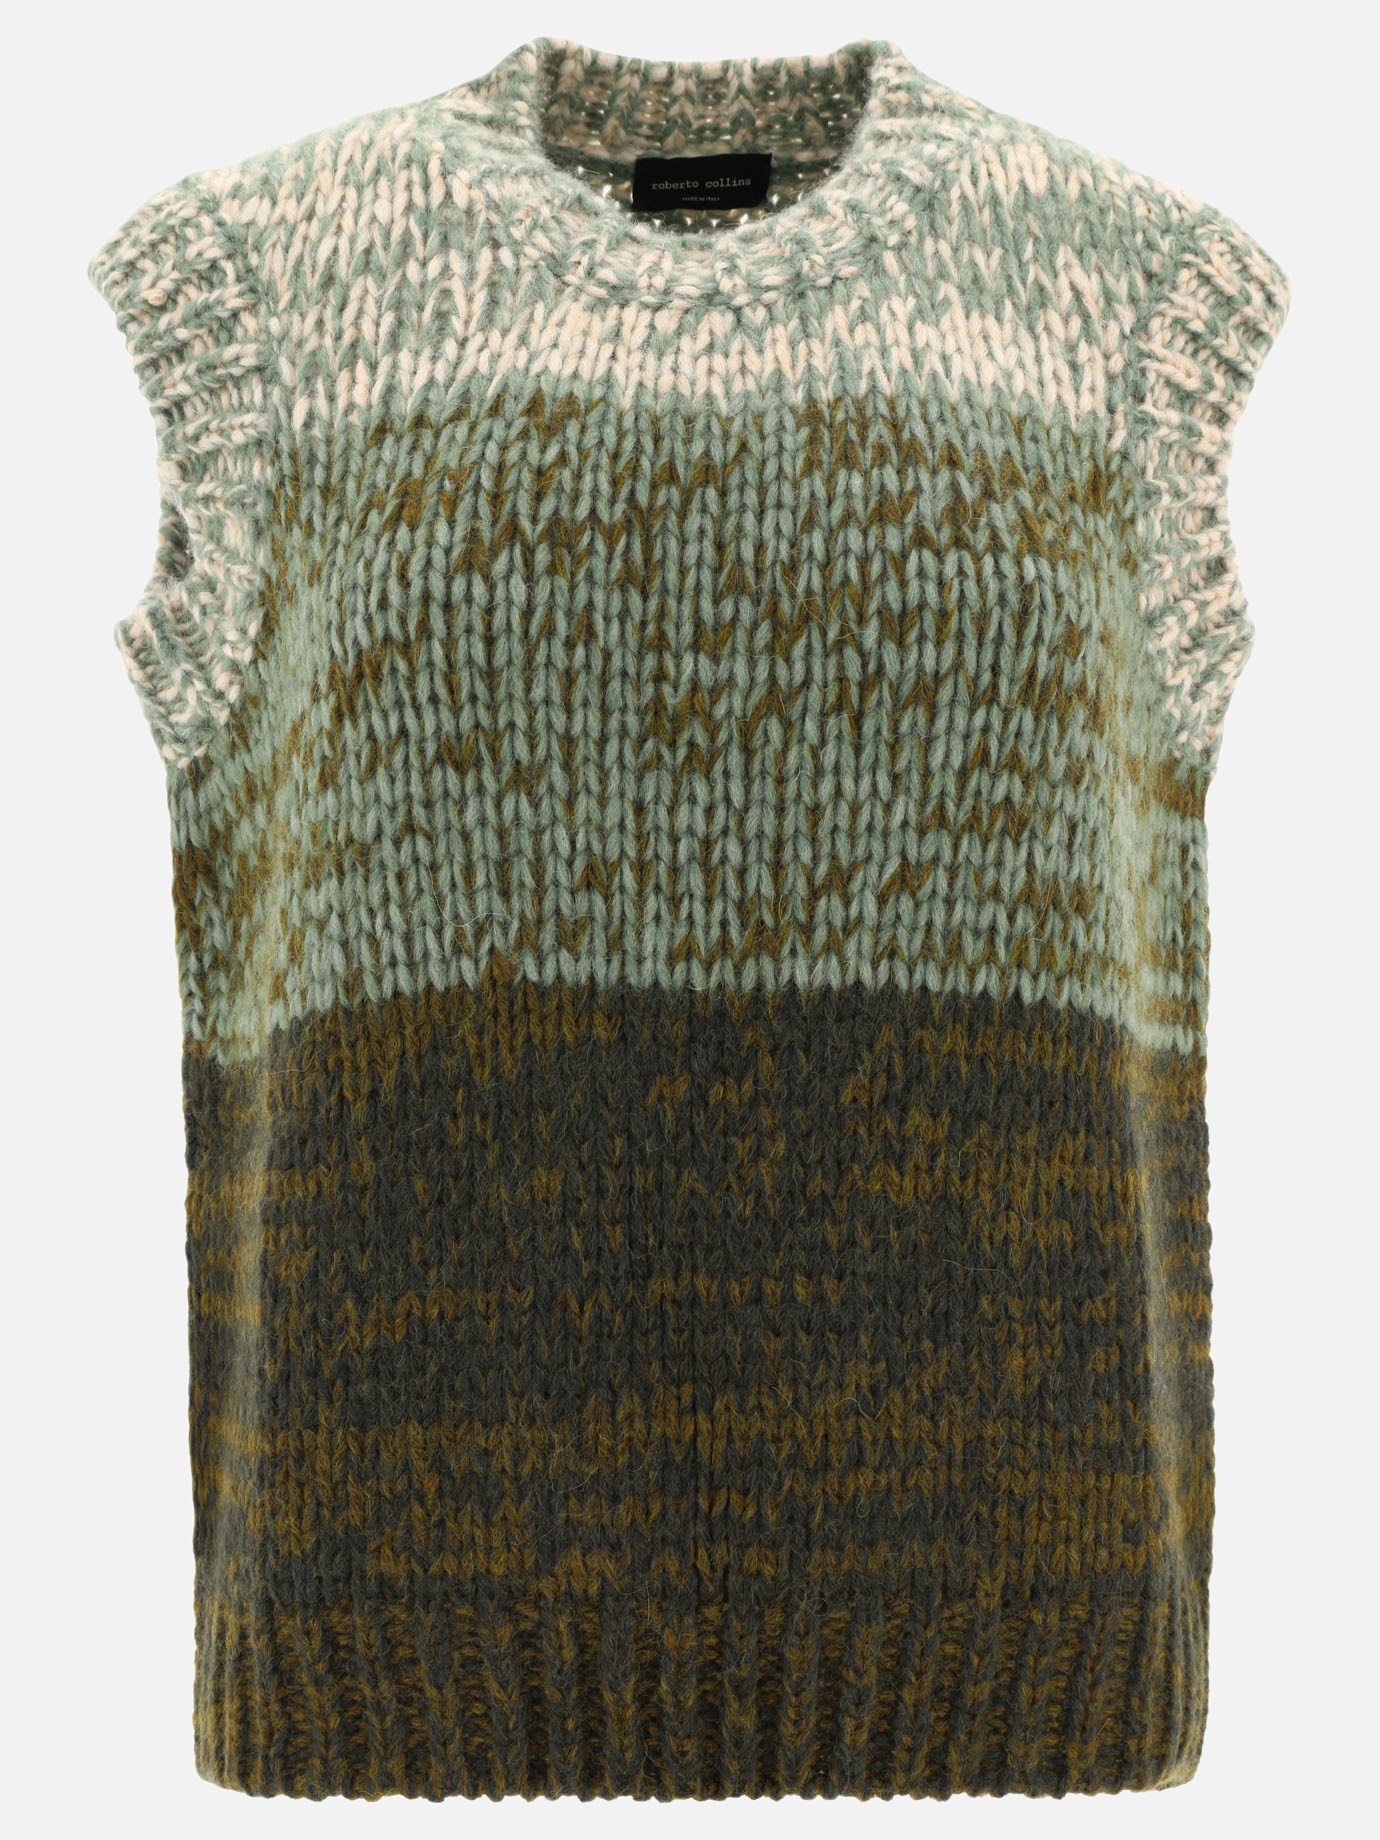 Degradé sleeveless sweaterby Roberto Collina - 3